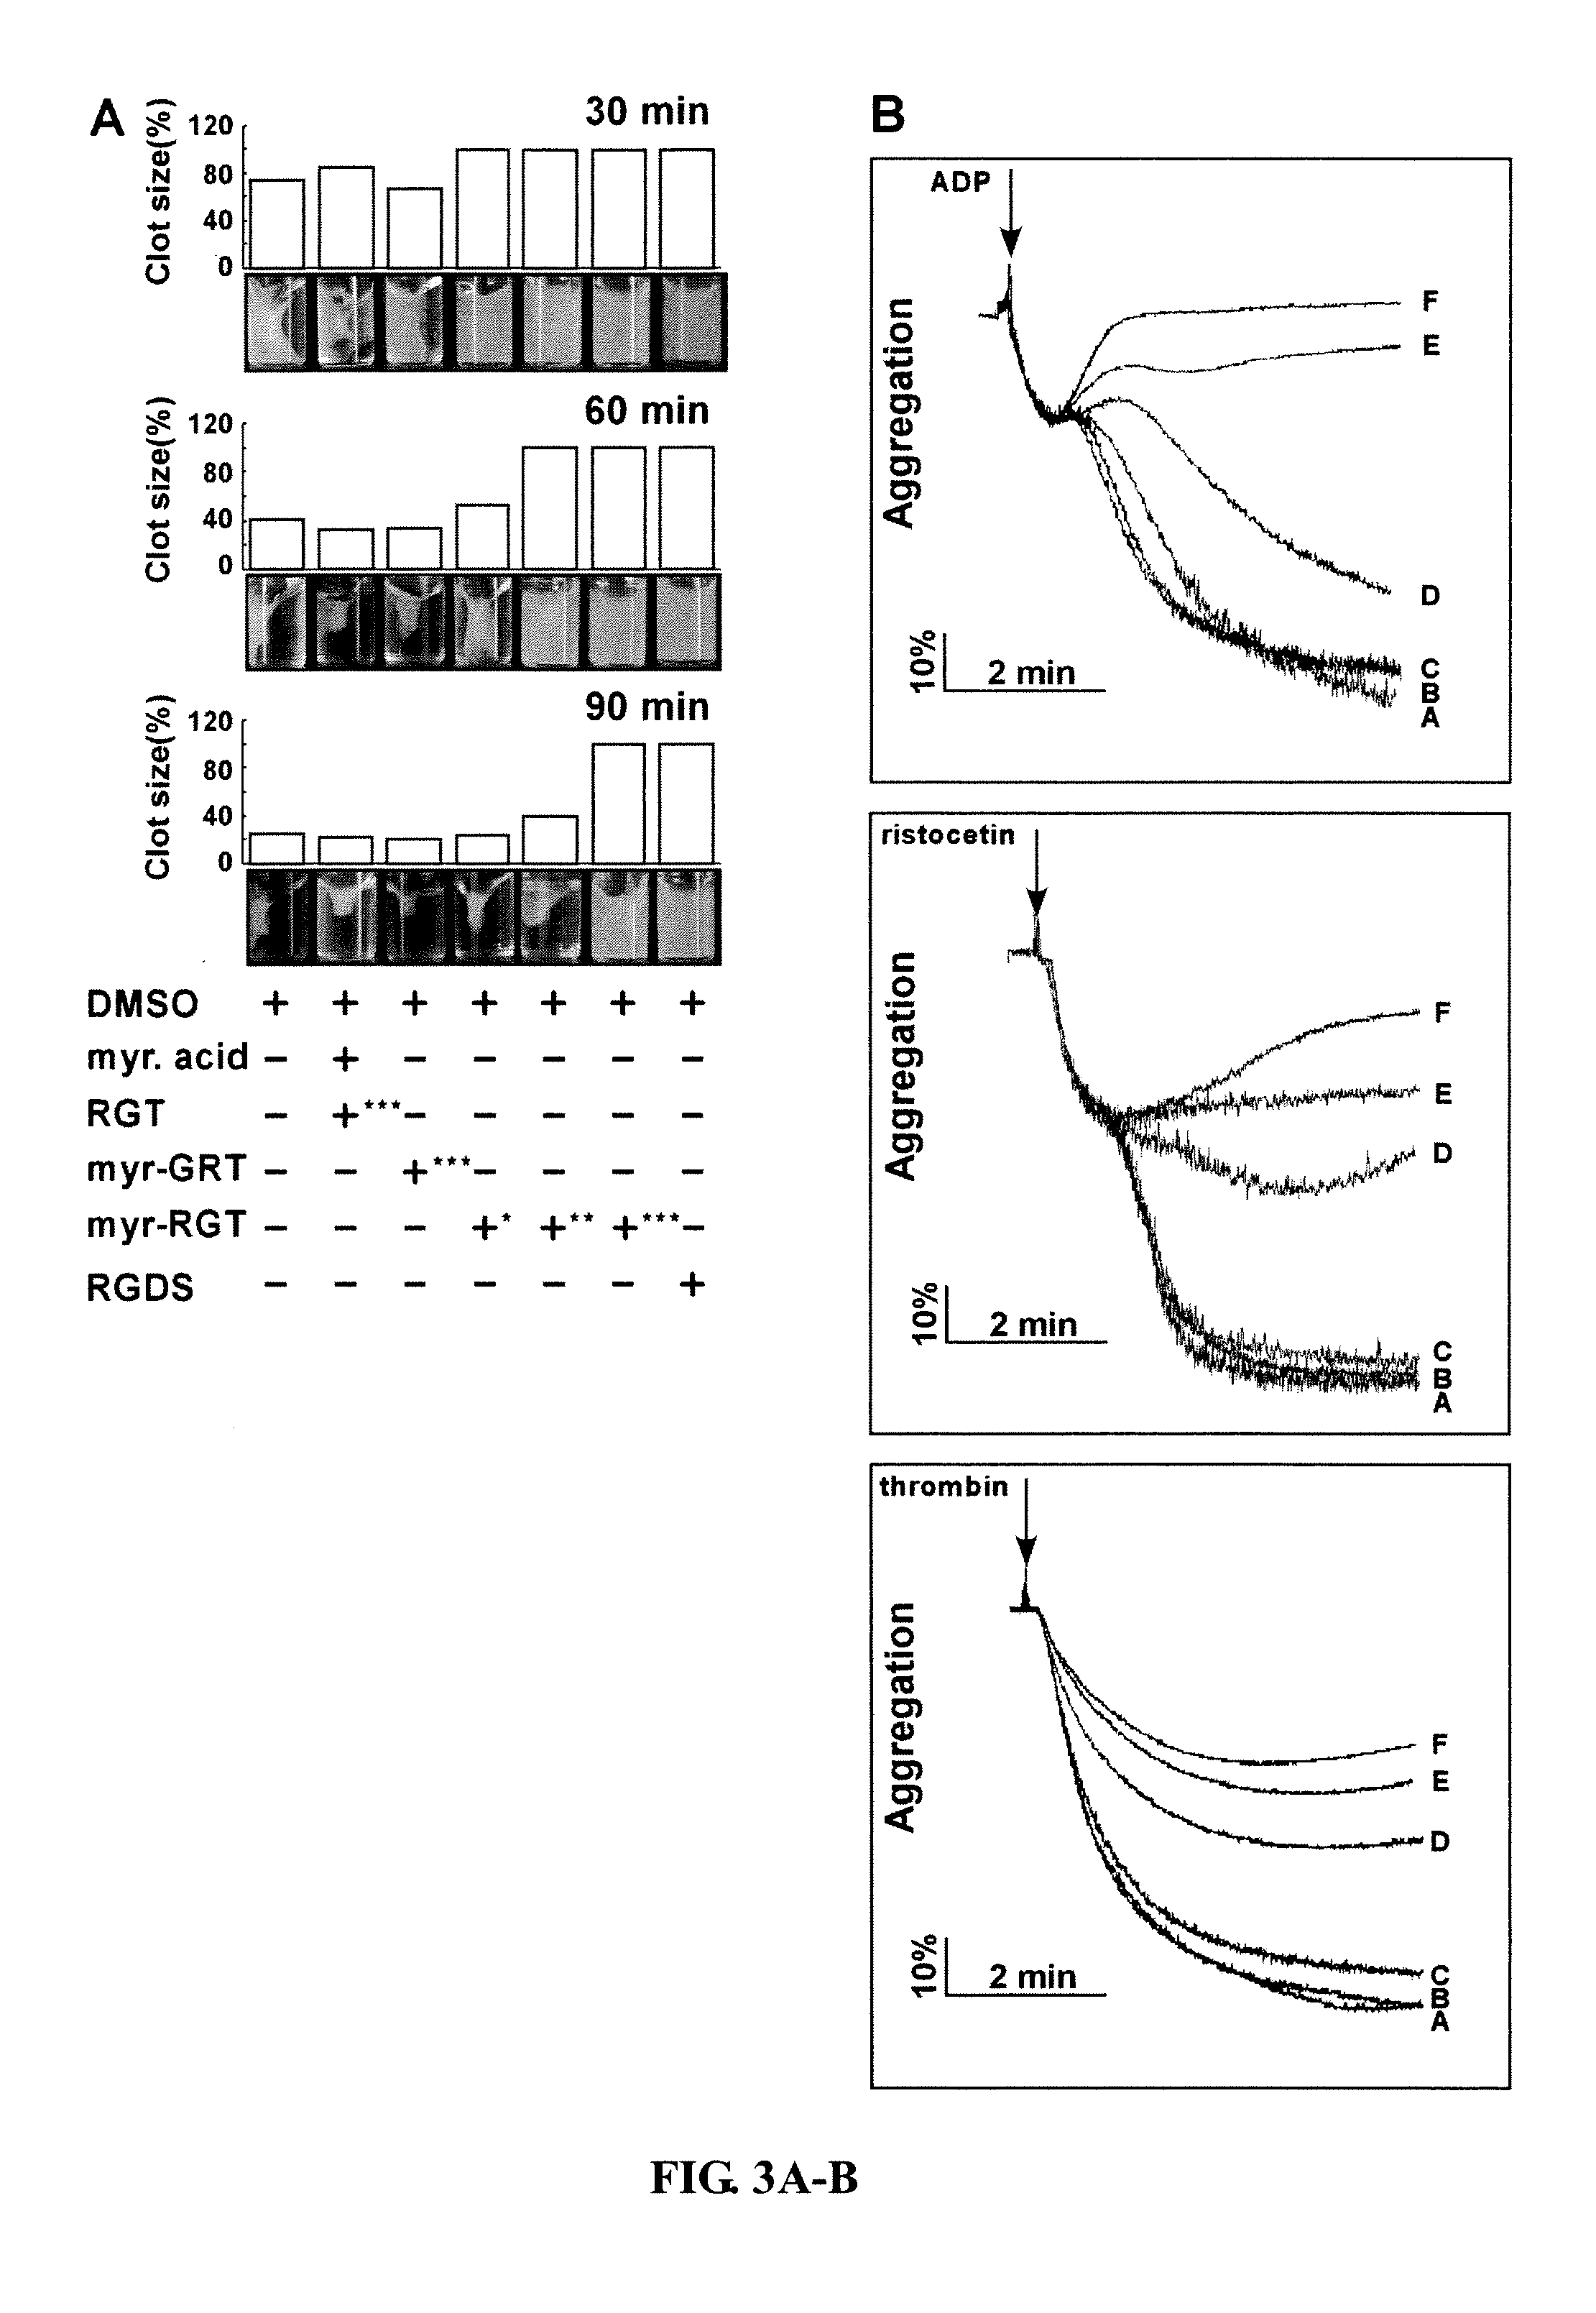 Modulation of Platelet Aggregation